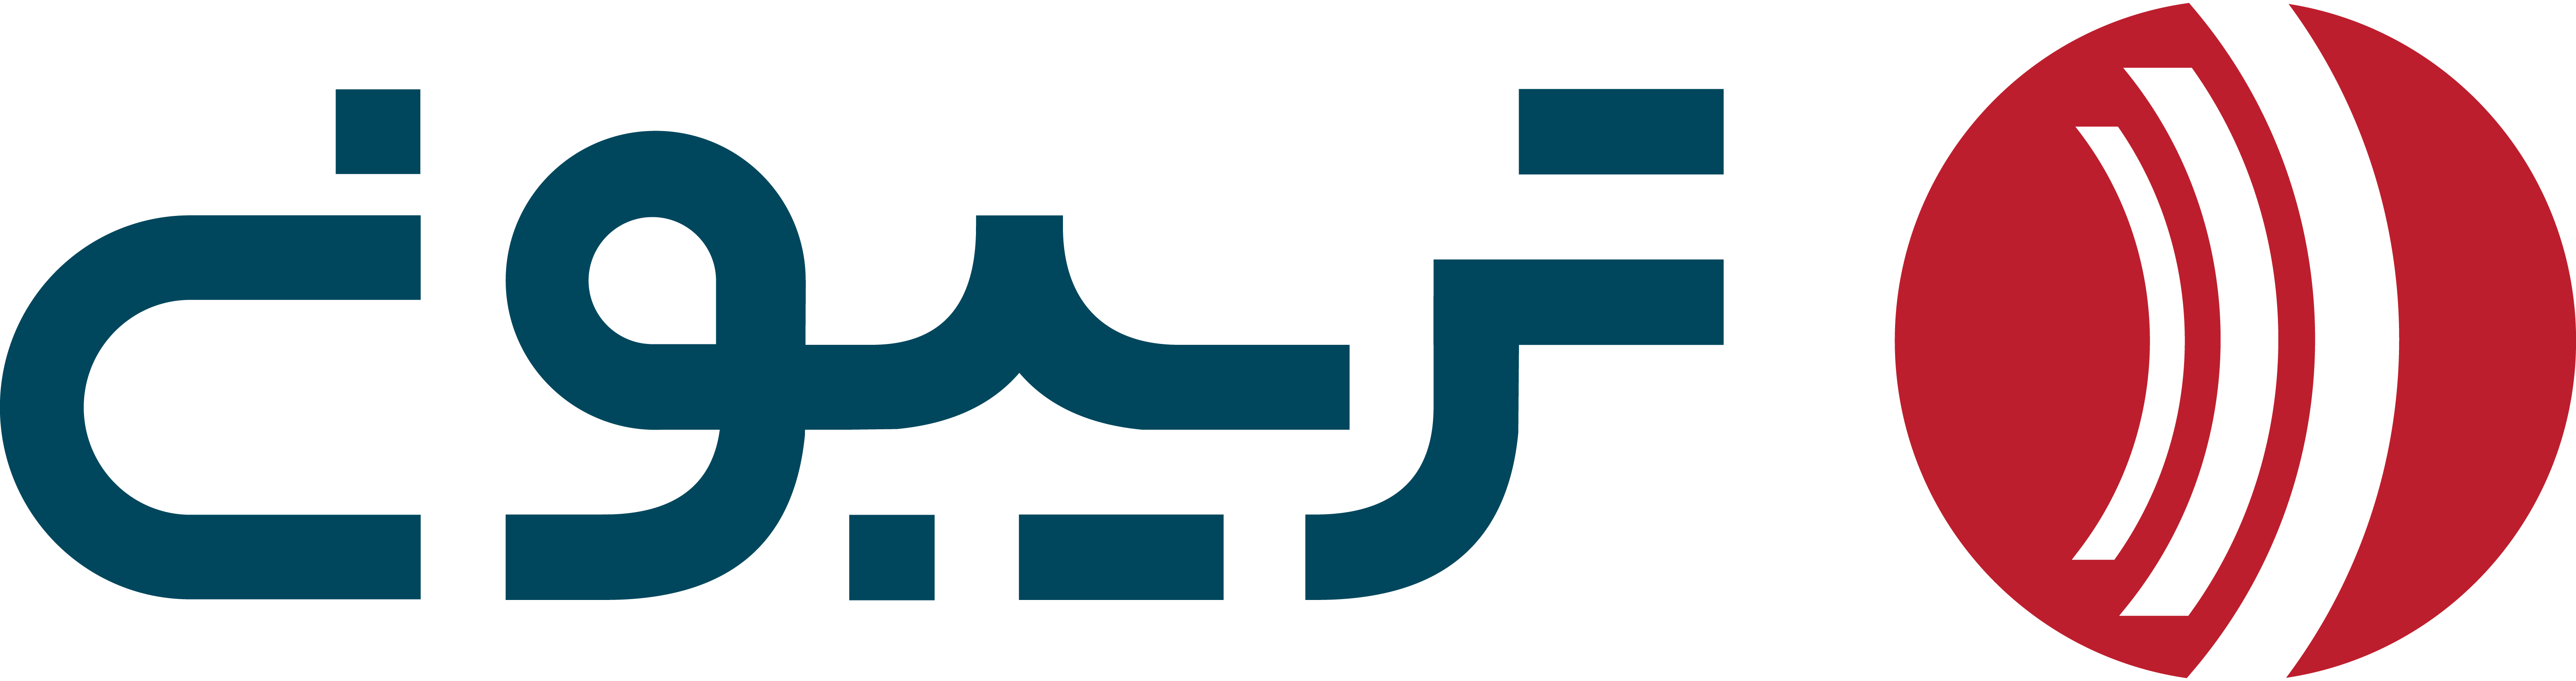 Triboon Logo 0 22